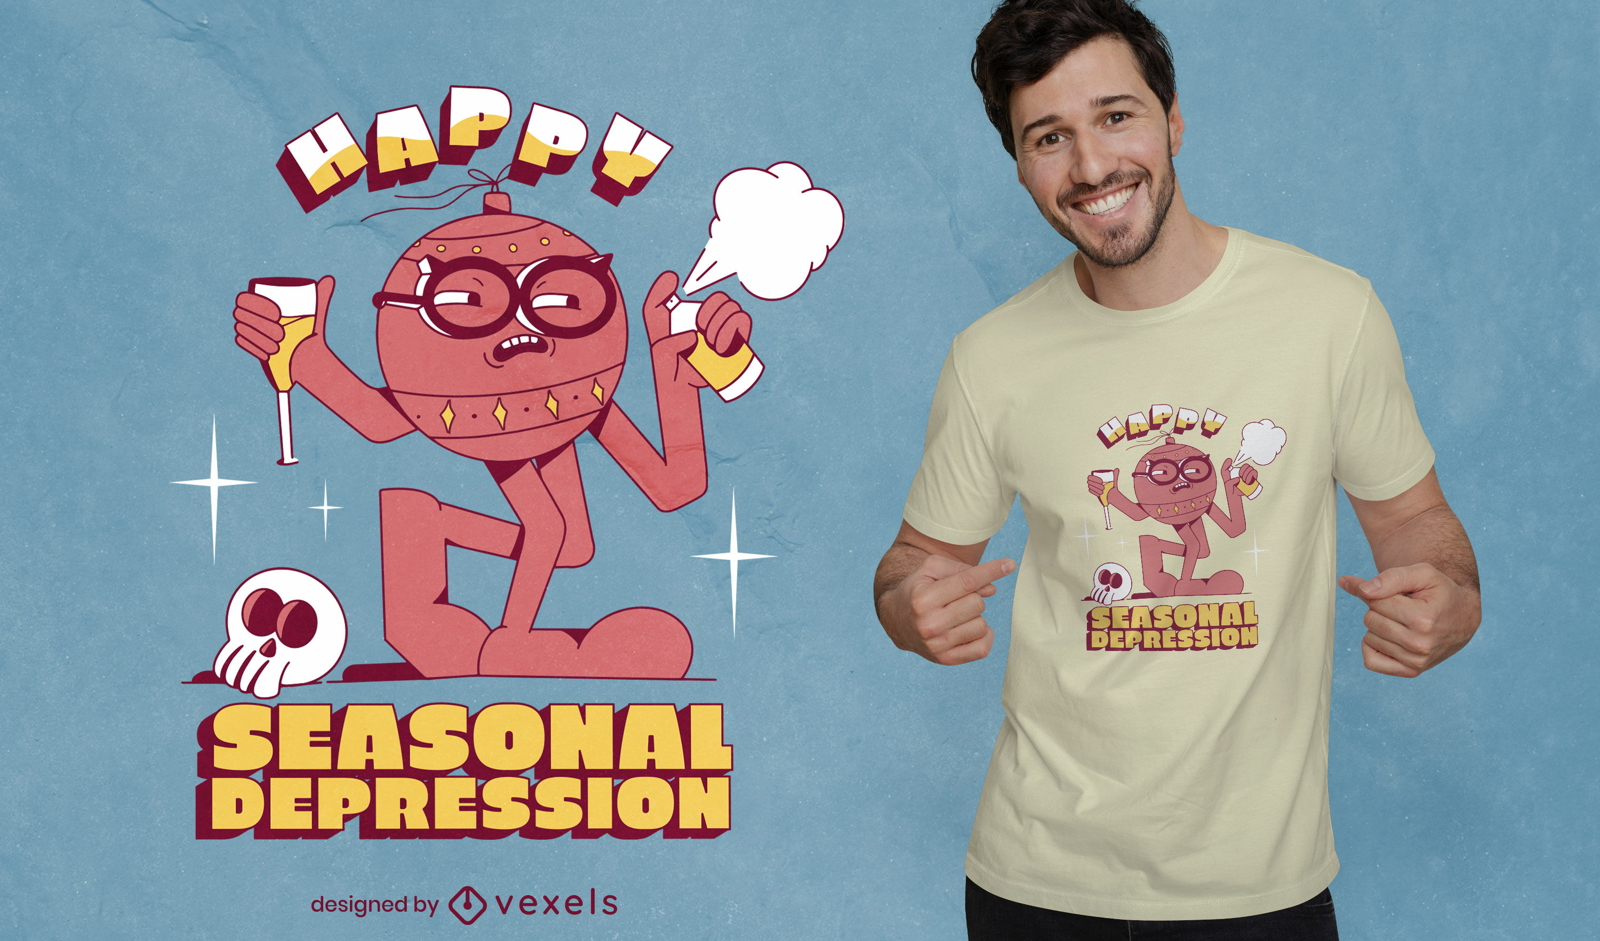 Anti New Year seasonal depression t-shirt design